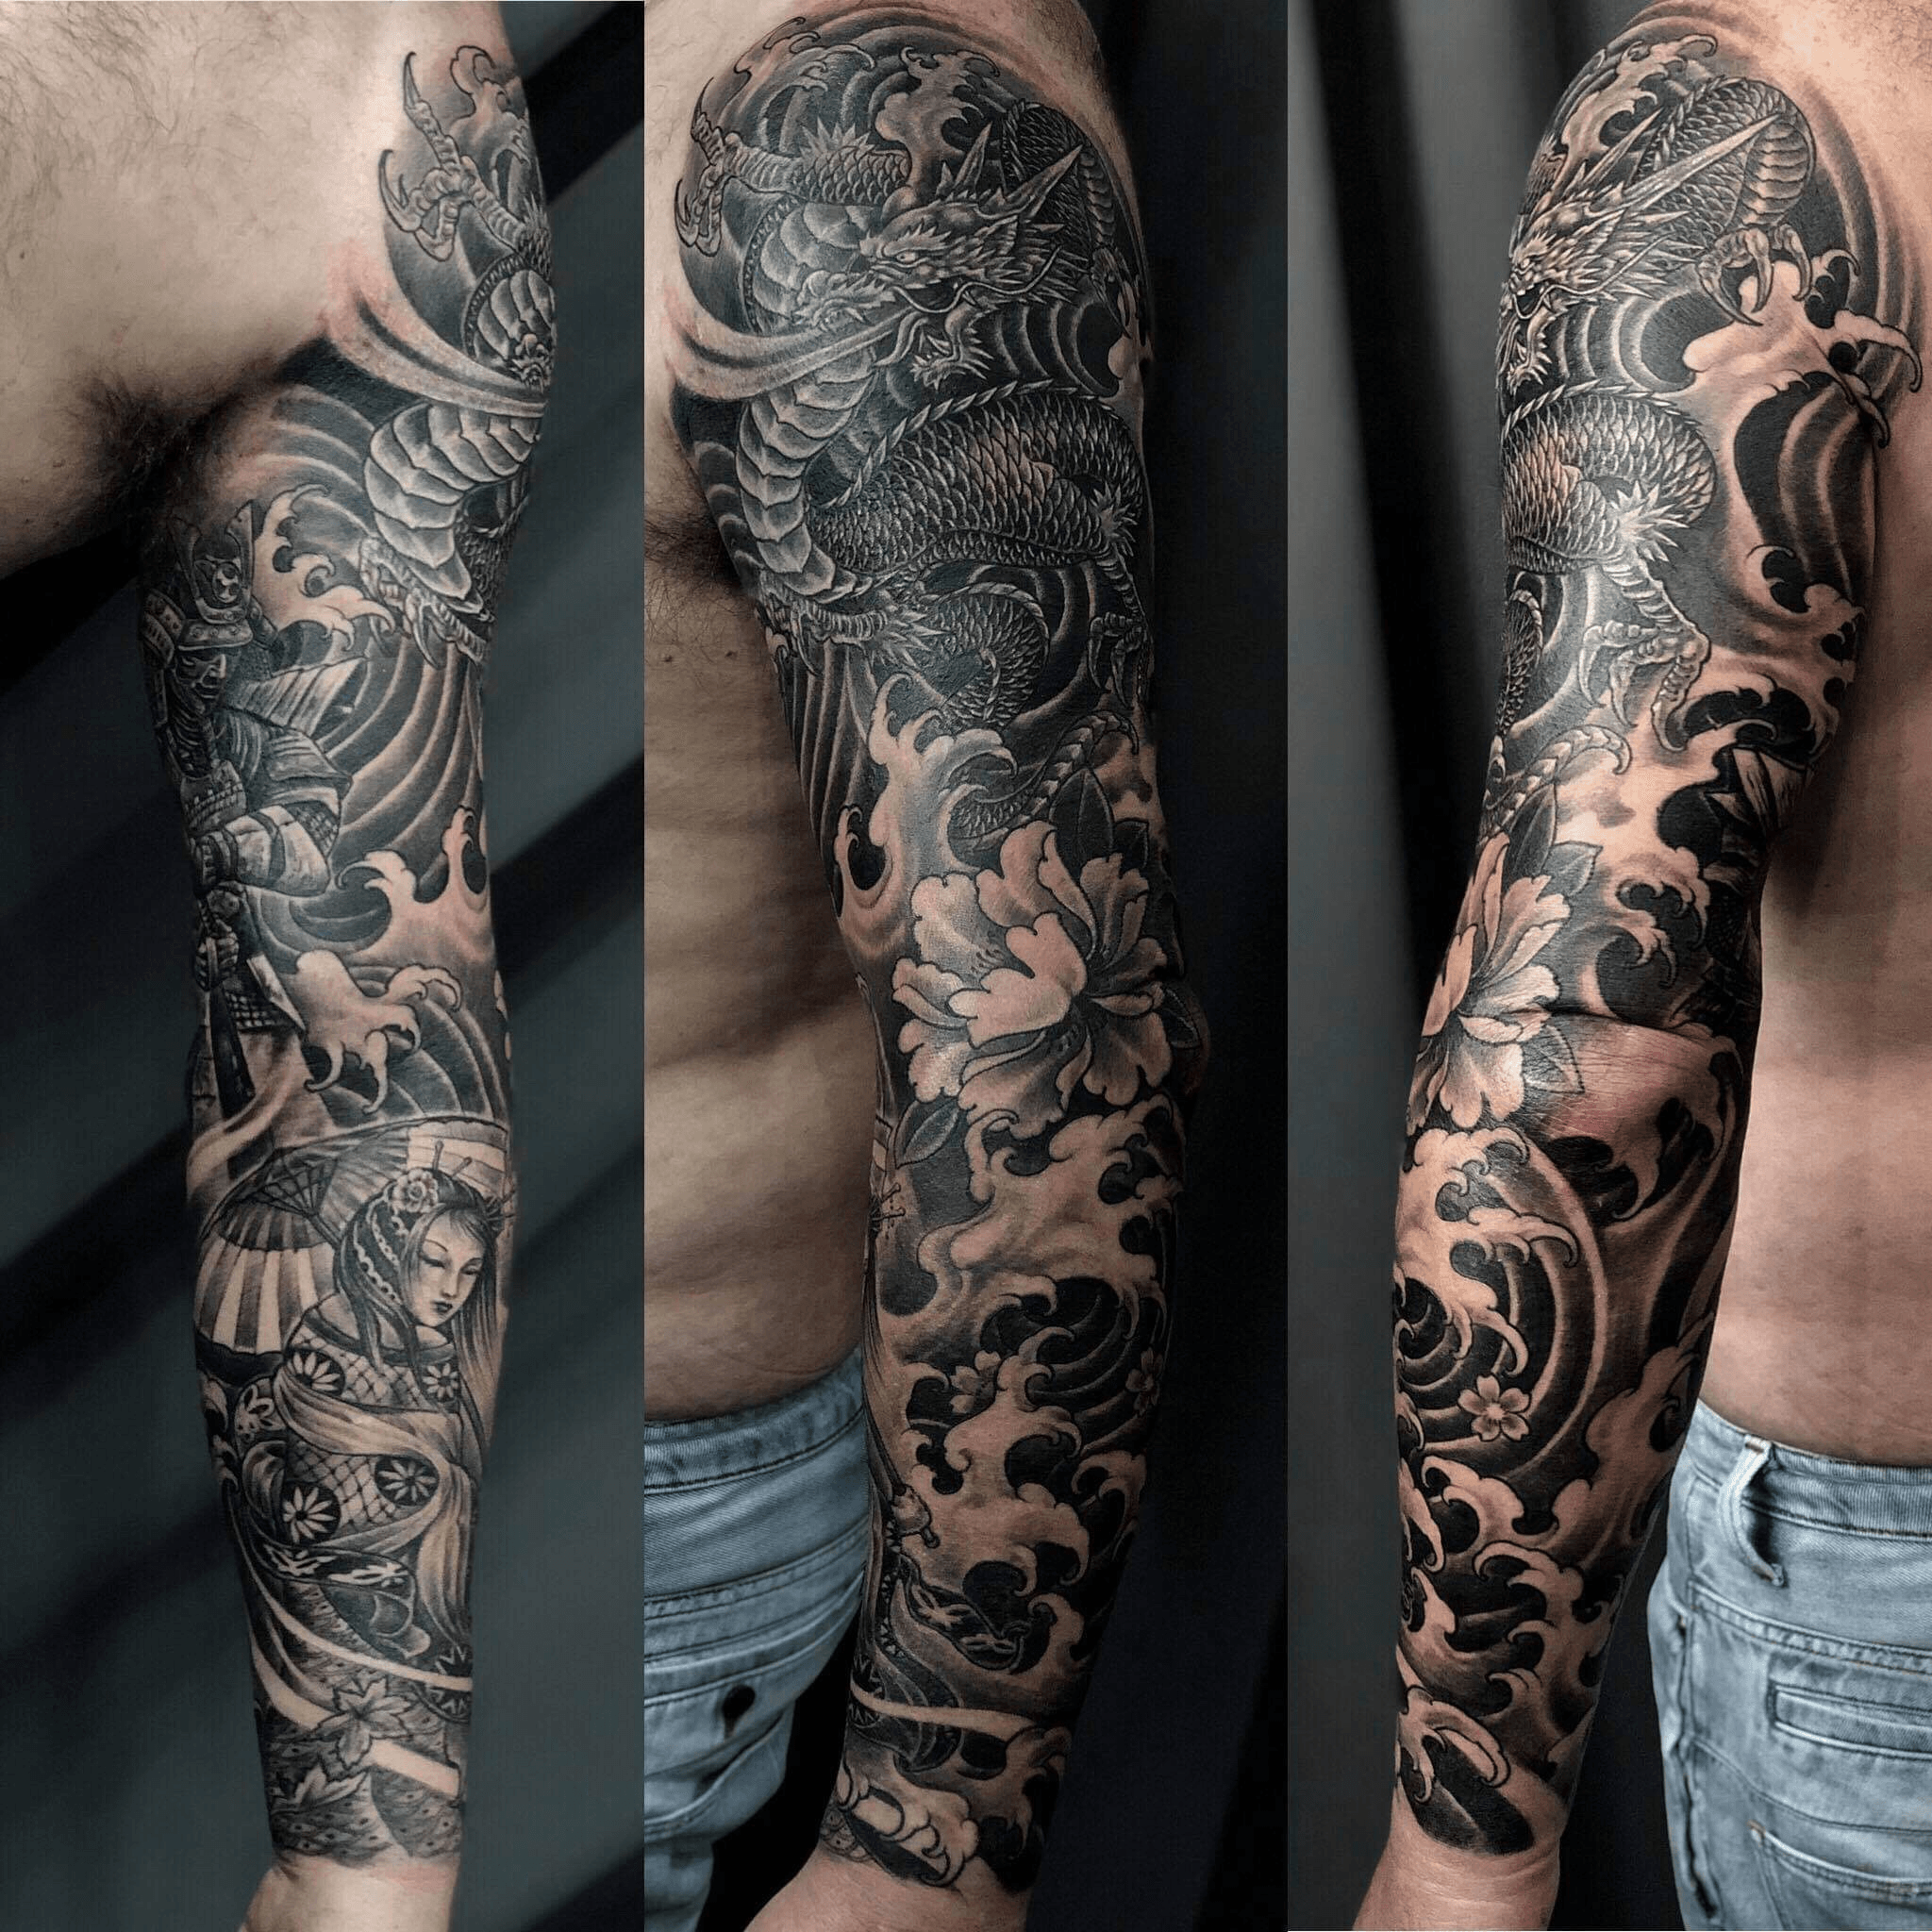 Aggregate more than 75 full sleeve arm tattoo - esthdonghoadian